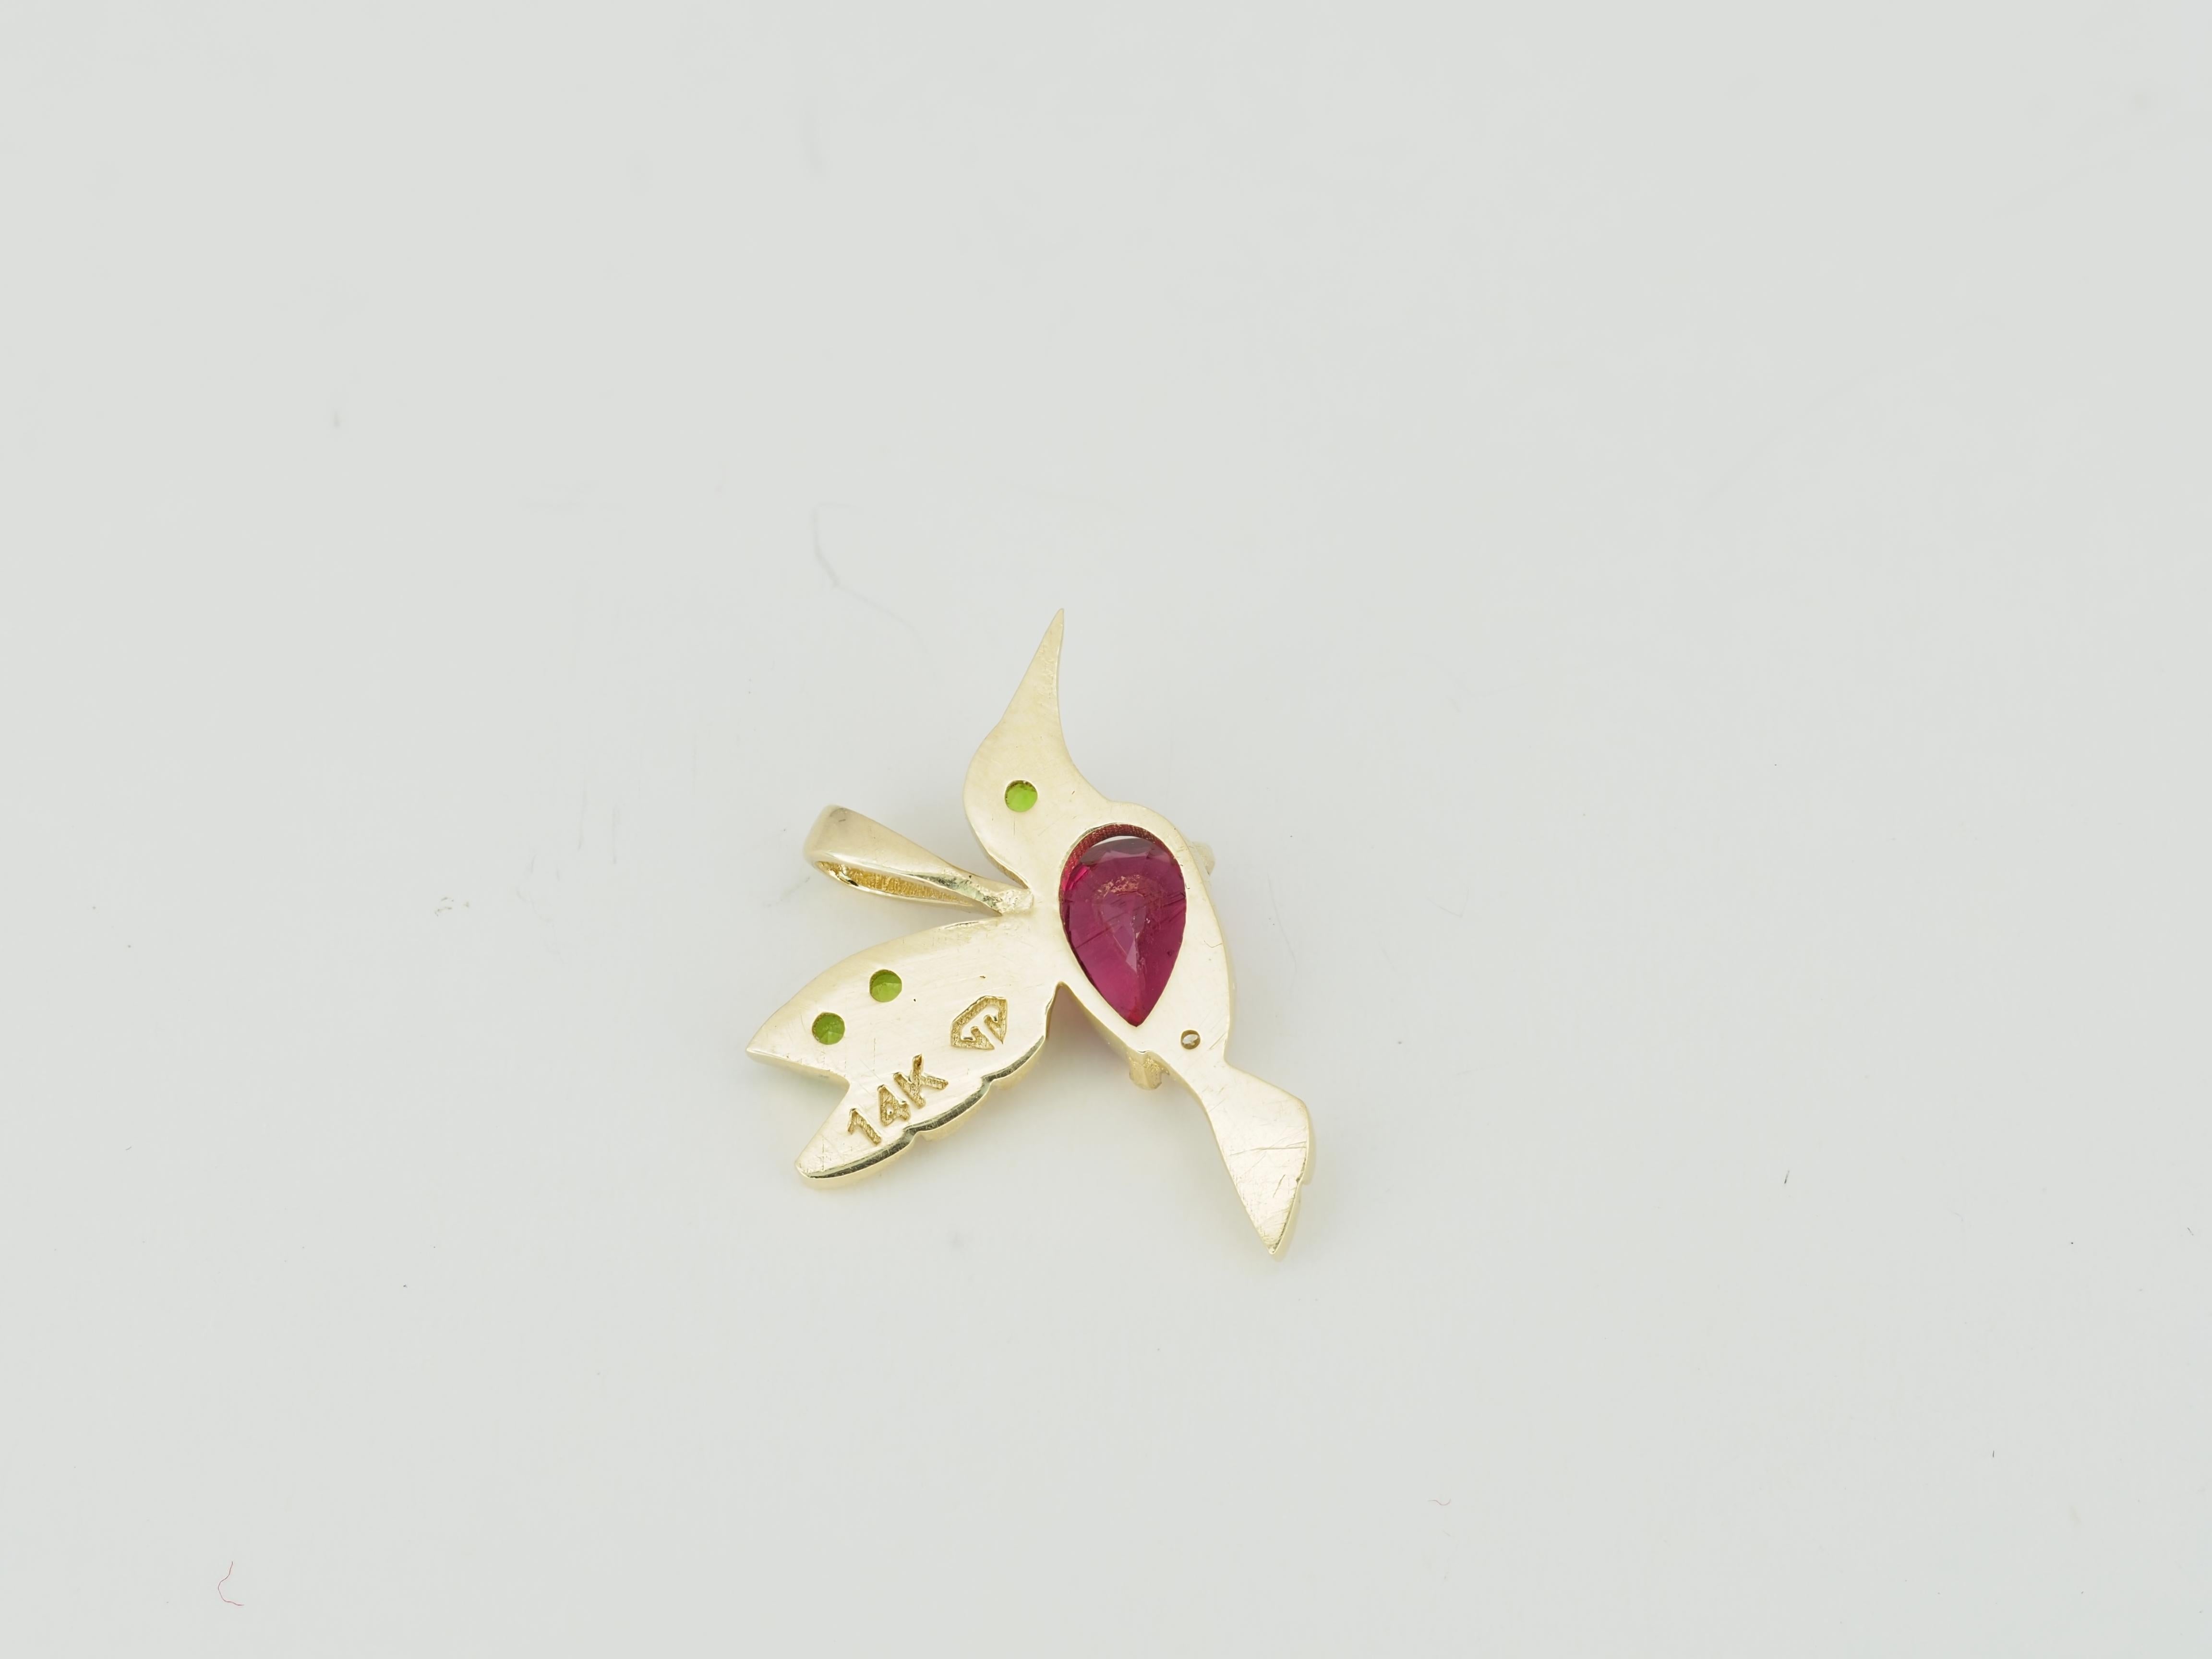 Women's 14k Gold Hummingbird Pendant with Rubies, Bird Pendant with Colored Gemstones